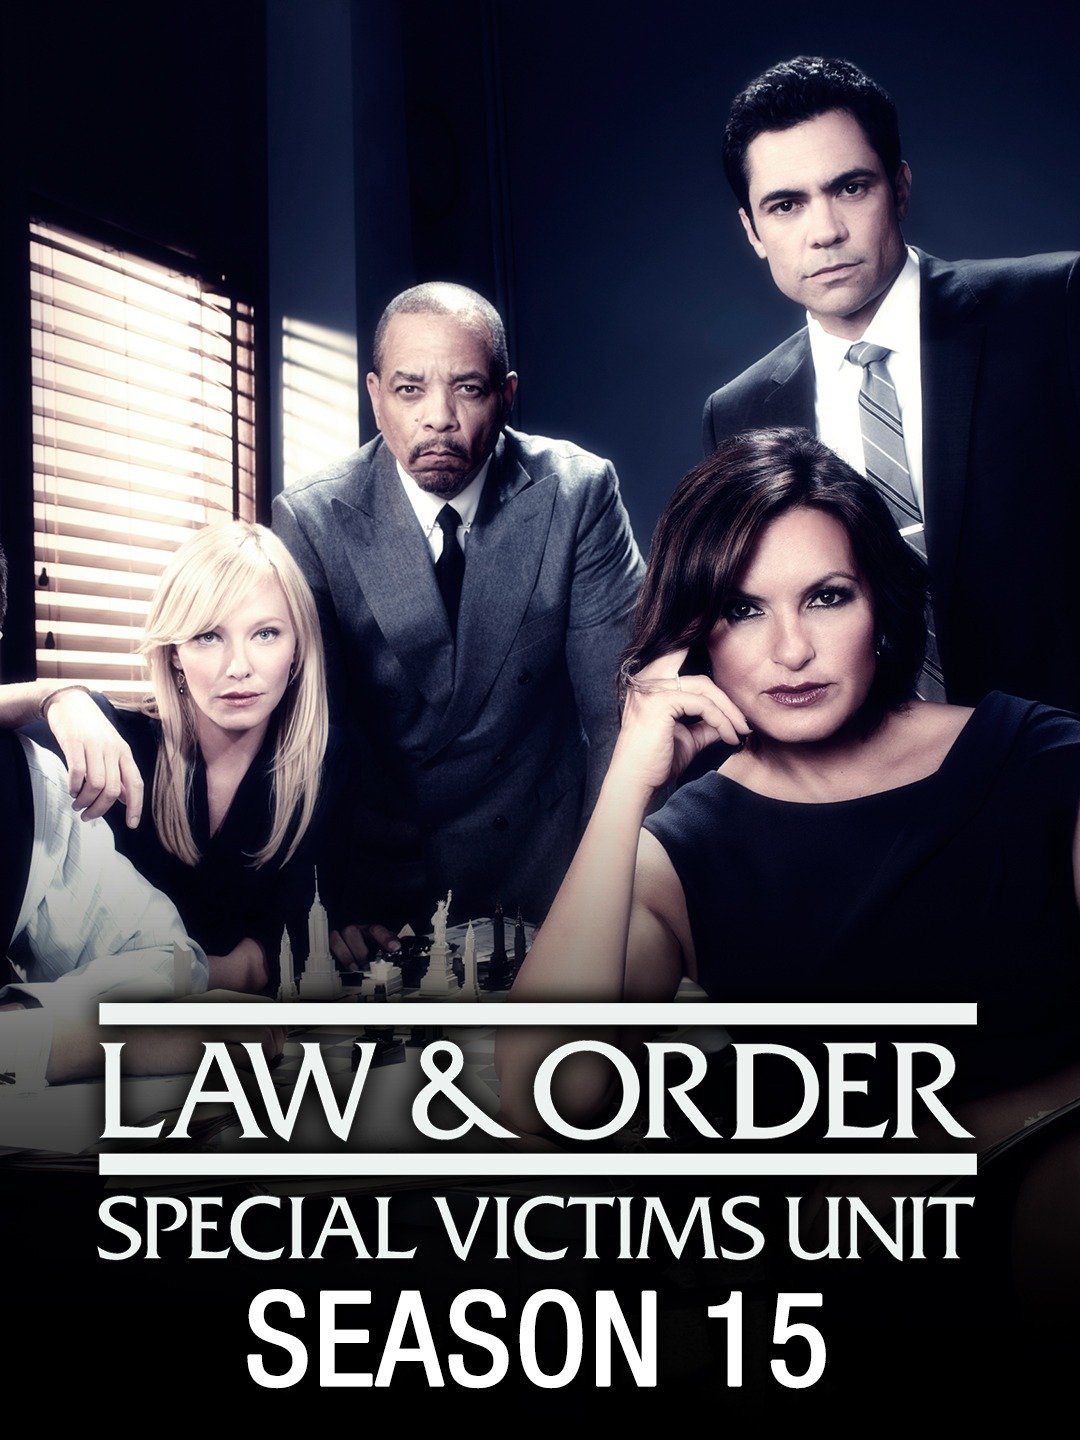 Law and order svu season 6 complete download popstart